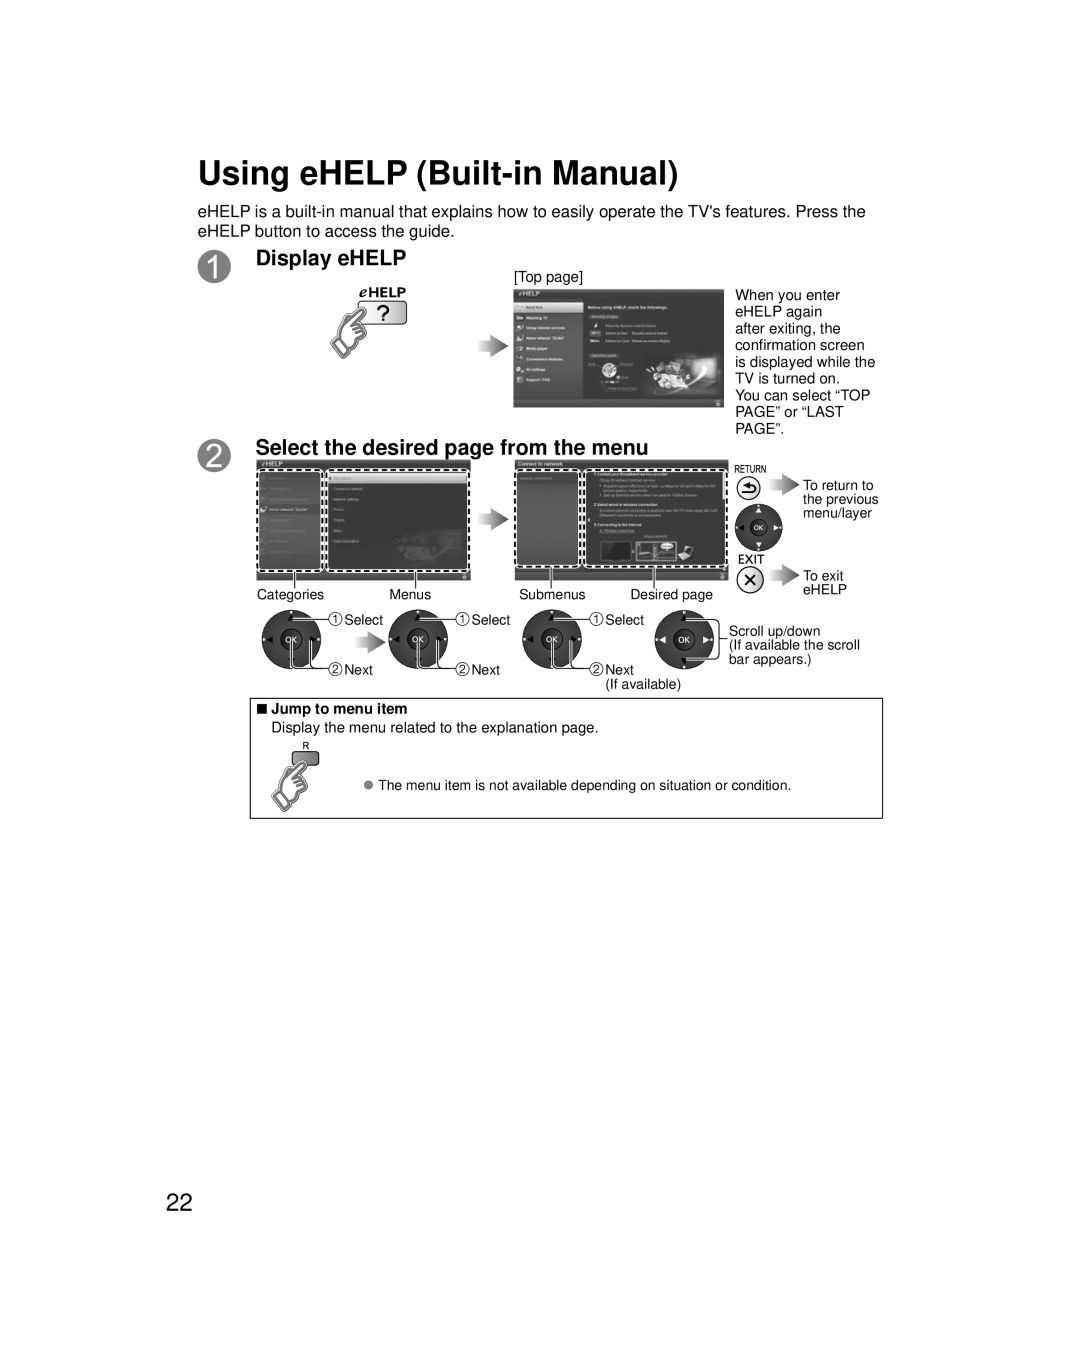 Panasonic TCP65VT60 Using eHELP Built-in Manual, Display eHELP, Select the desired page from the menu, Jump to menu item 